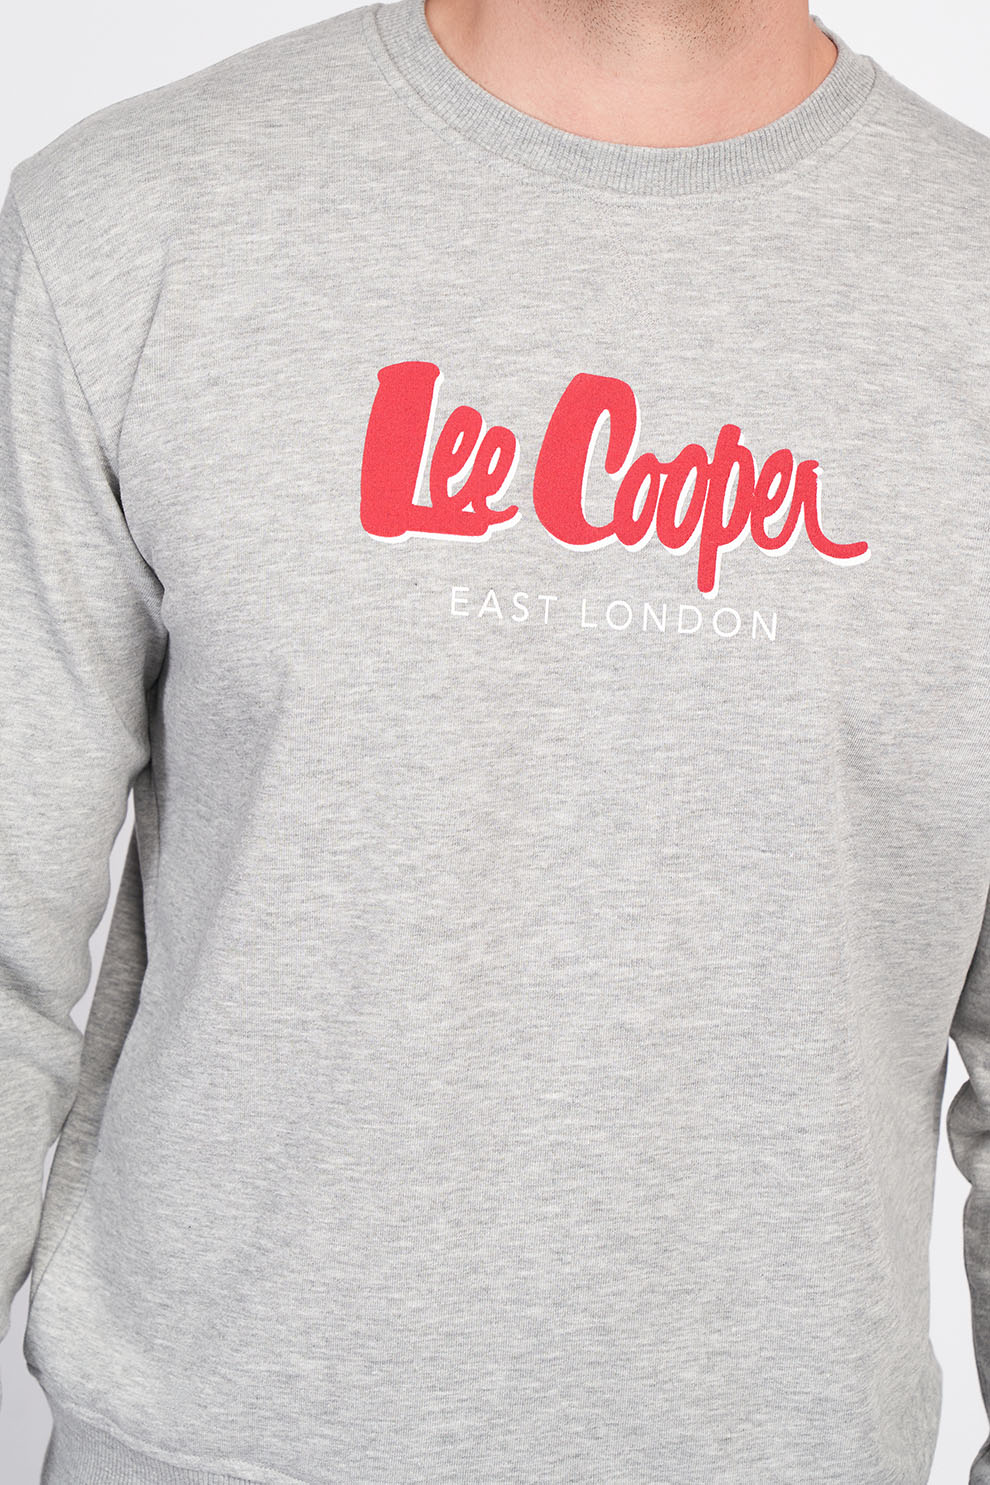 Lee Cooper - Jogging fille imprimé logo - Gris - Kiabi - 22.43€